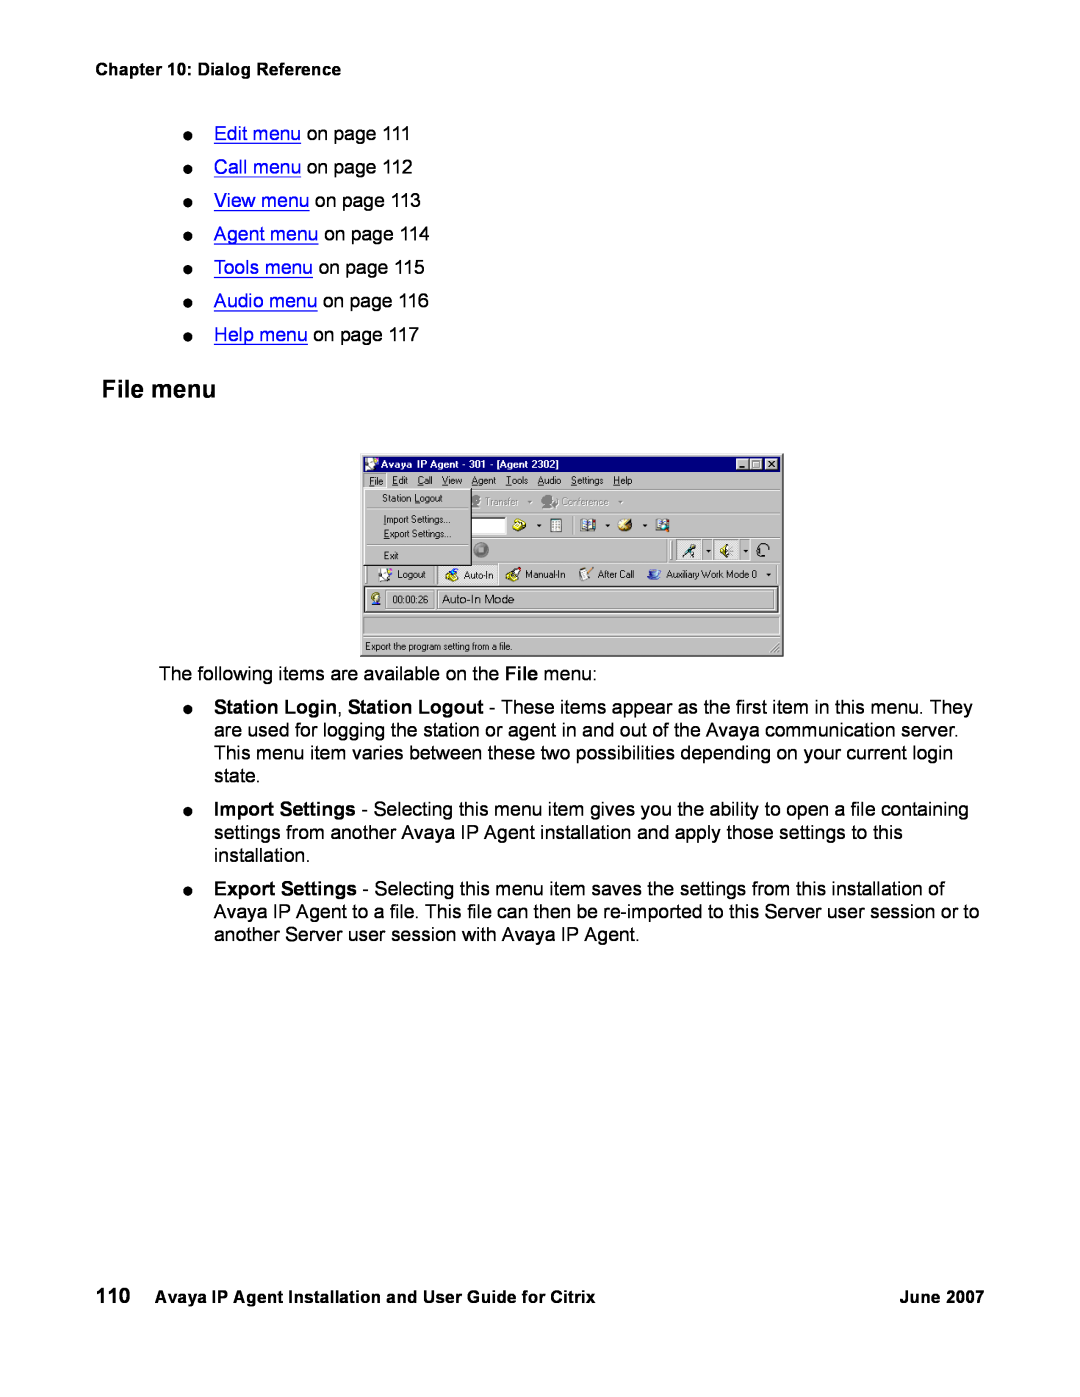 Avaya 7 manual File menu 